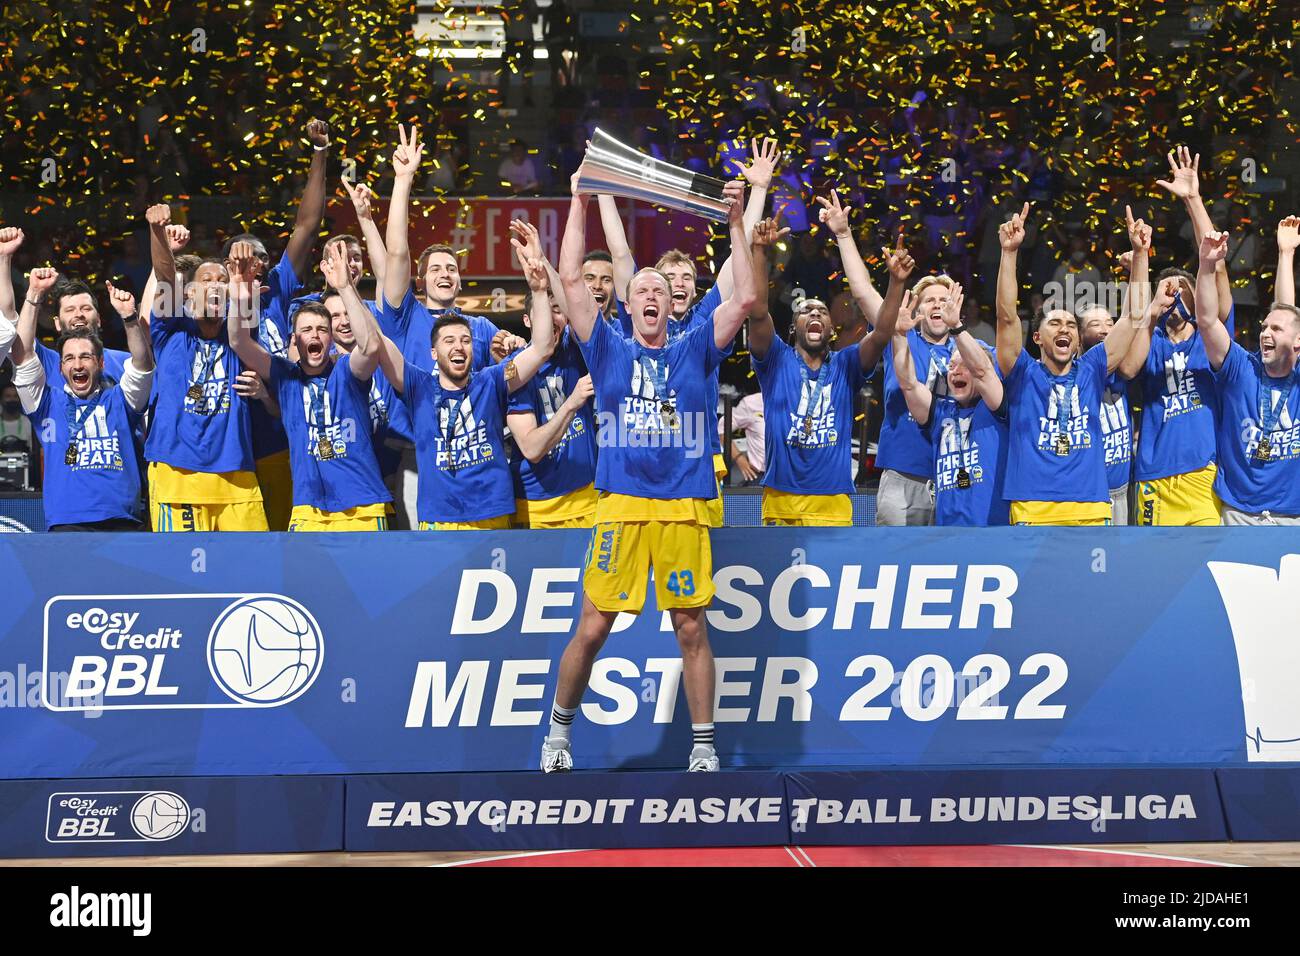 munich-deutschland-19th-june-2022-team-photo-team-team-team-photo-luke-sikma-berlin-with-cup-cup-trophy-jubilation-joy-enthusiasm-award-ceremony-german-champion-championship-basketball-1st-bundesliga-final.jpg